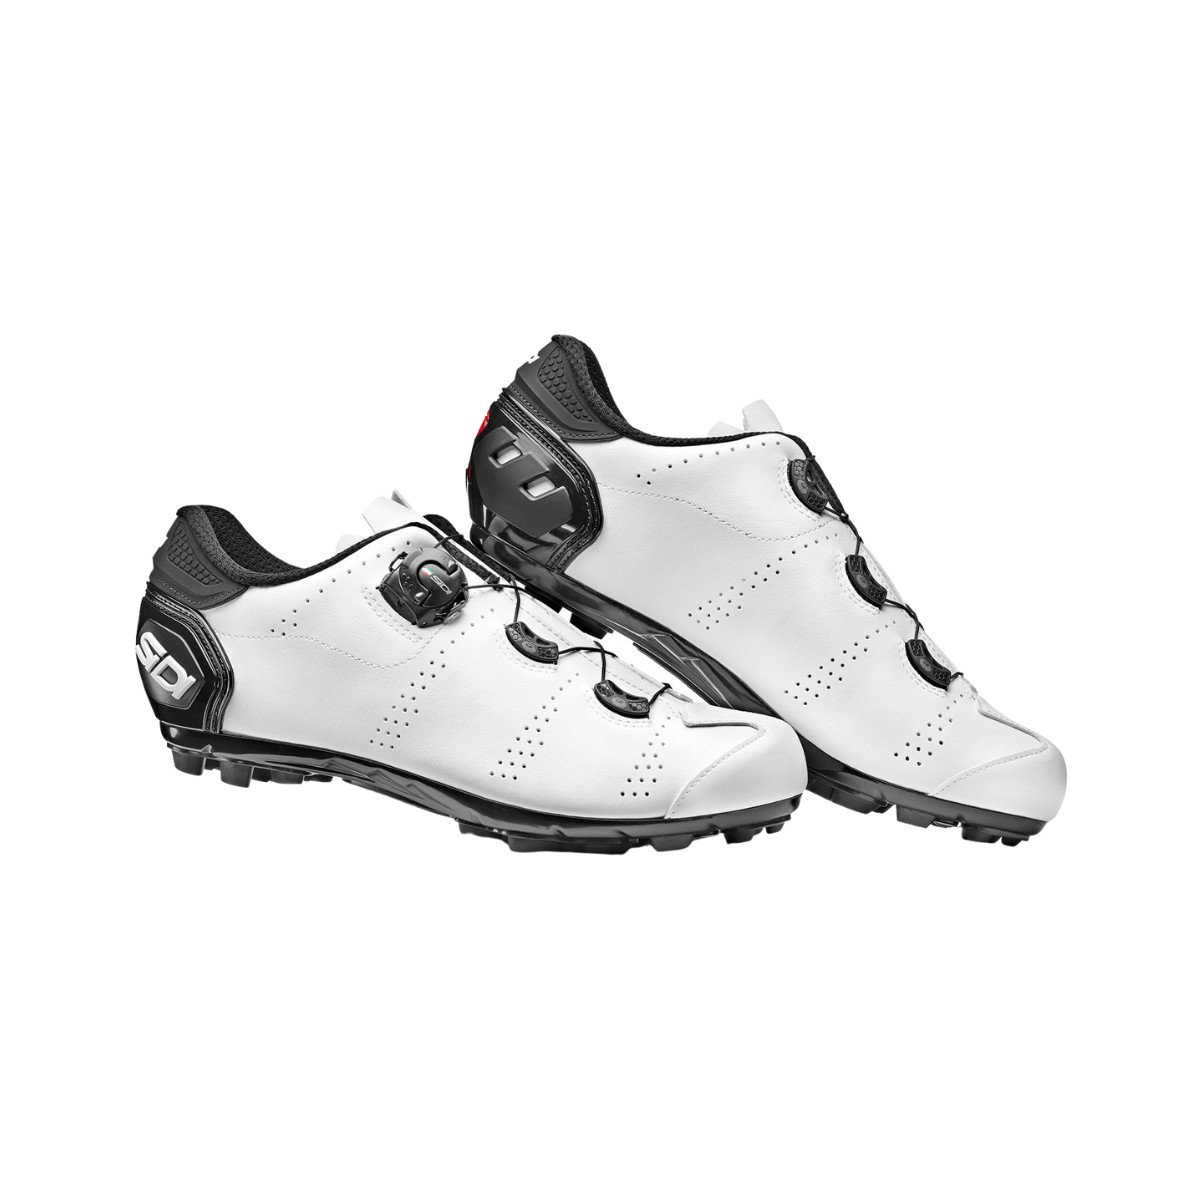 Chaussures Sidi Speed MTB Blanc, Taille 41 - EUR